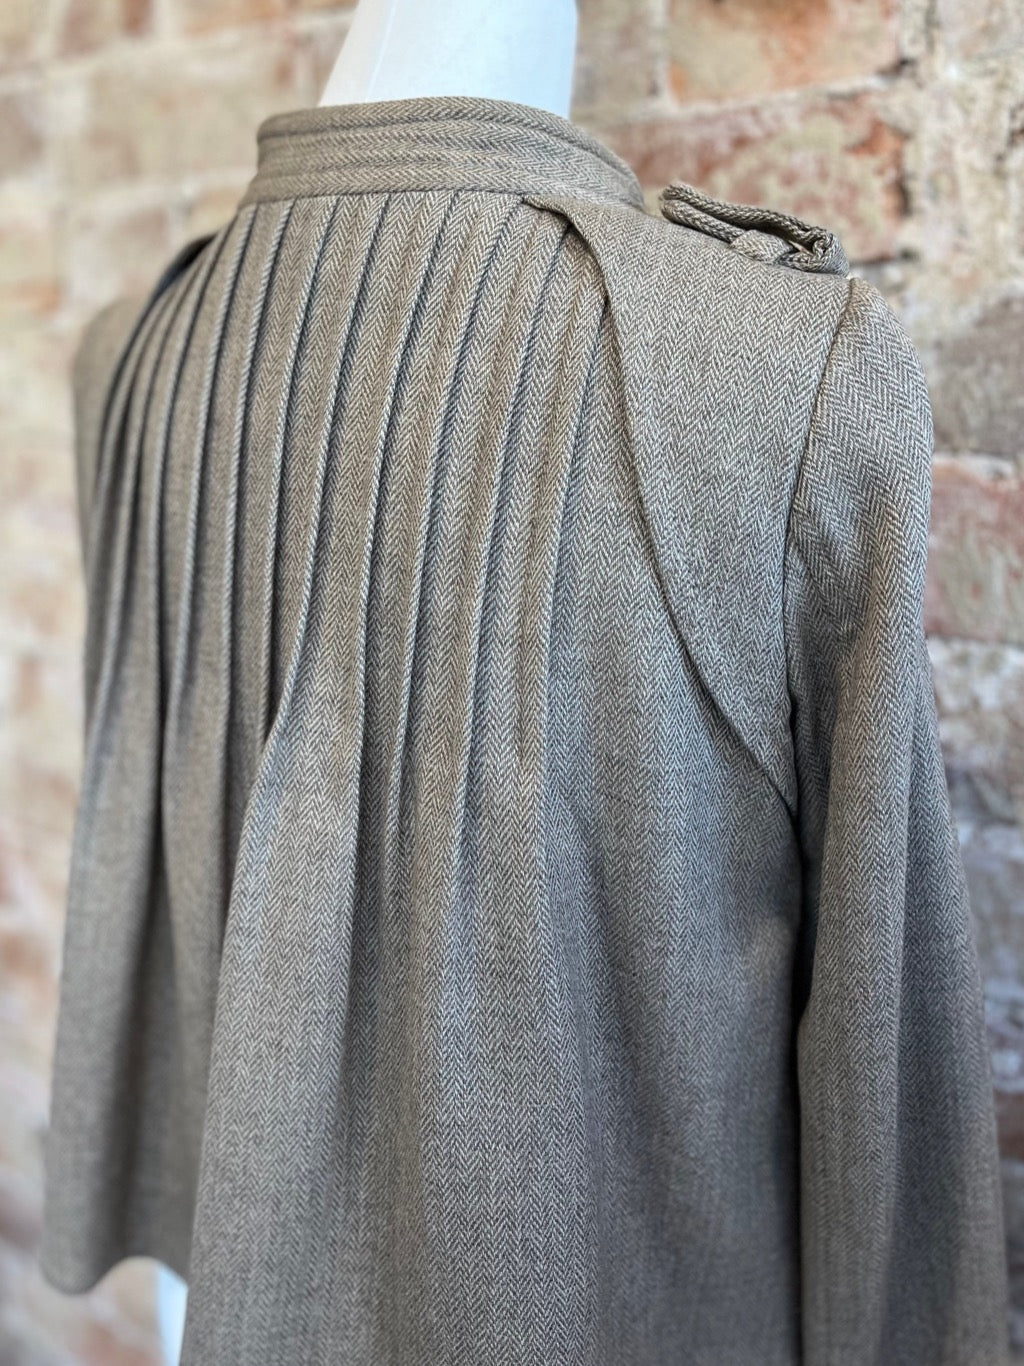 Scanlan & Theodore Tweed Jacket (size 8)